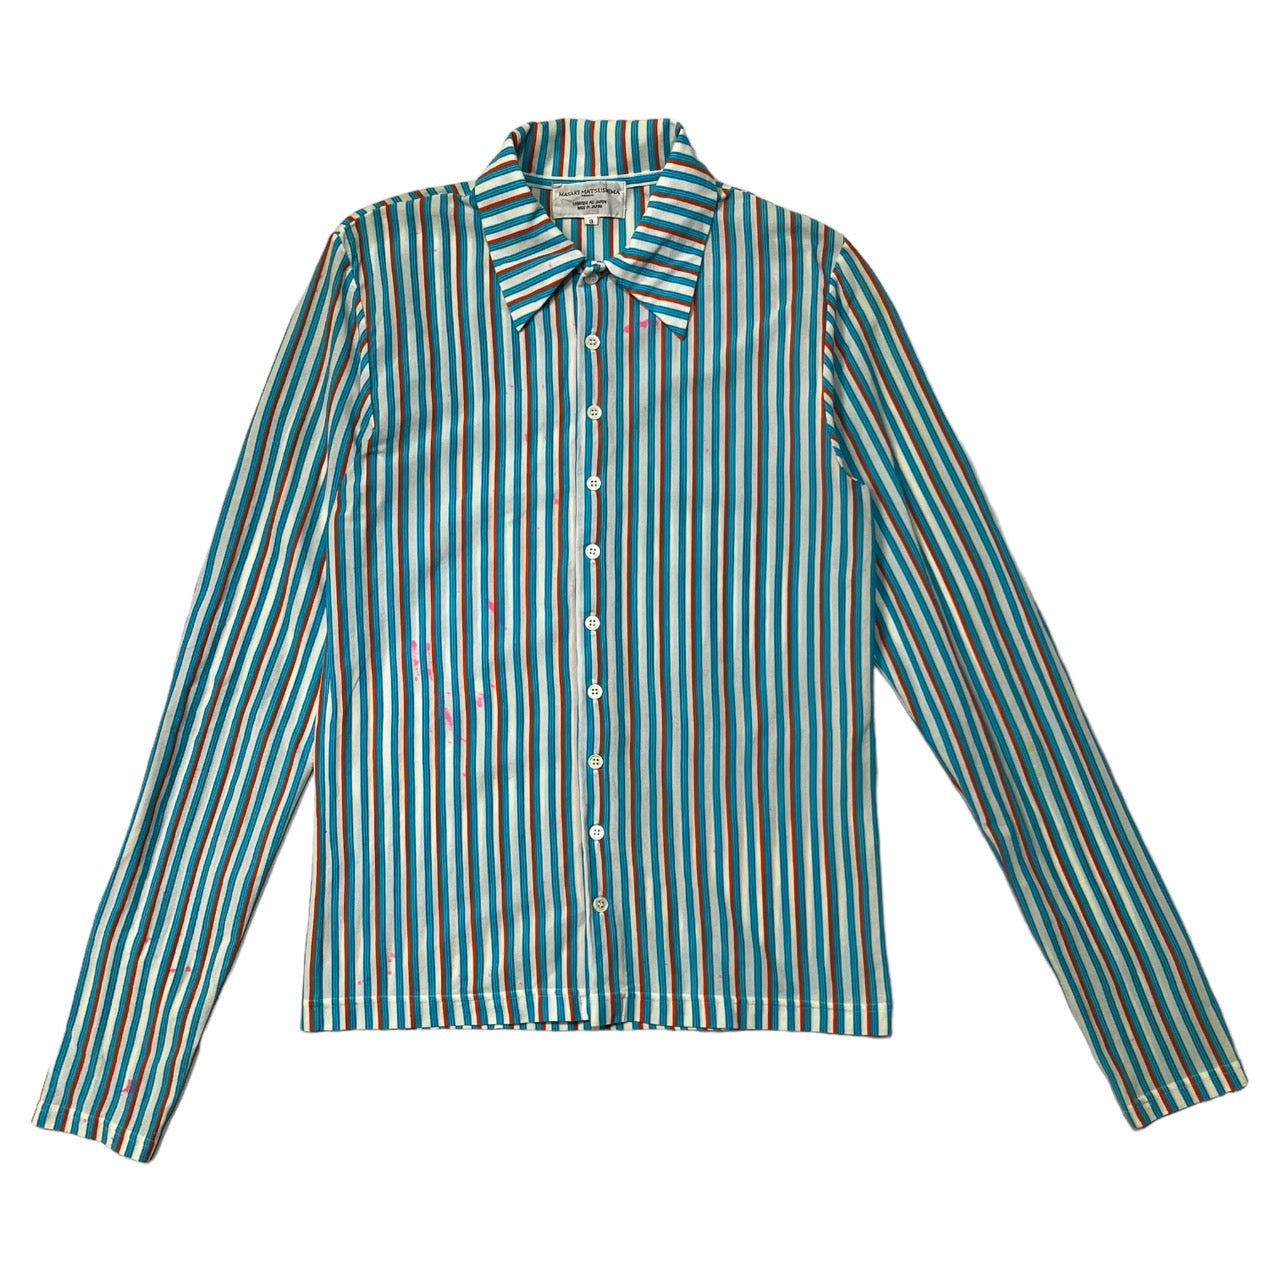 MASAKI MATSUSHIMA(マサキマツシマ) 00's  Painted striped shirt ペンキ加工 ストレッチ ストライプシャツ 長袖 3(L程度) ホワイト×ブルー